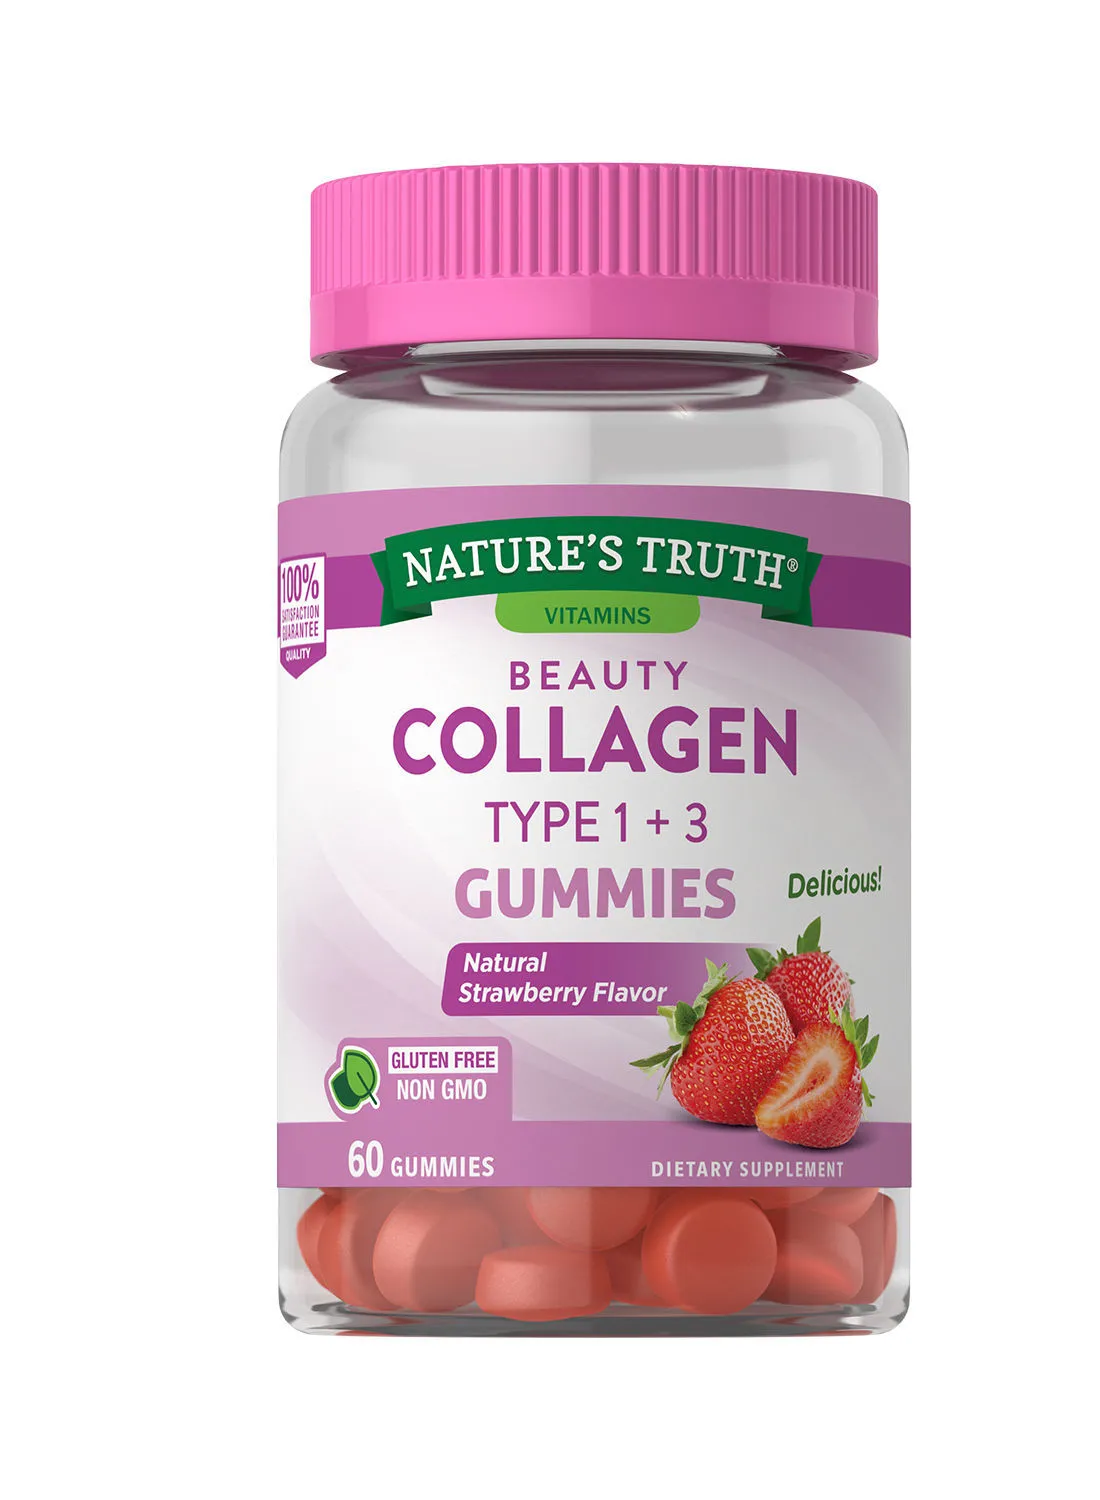 Nature's Truth Beauty Collagen Type 1 + 3, 60 Gummies